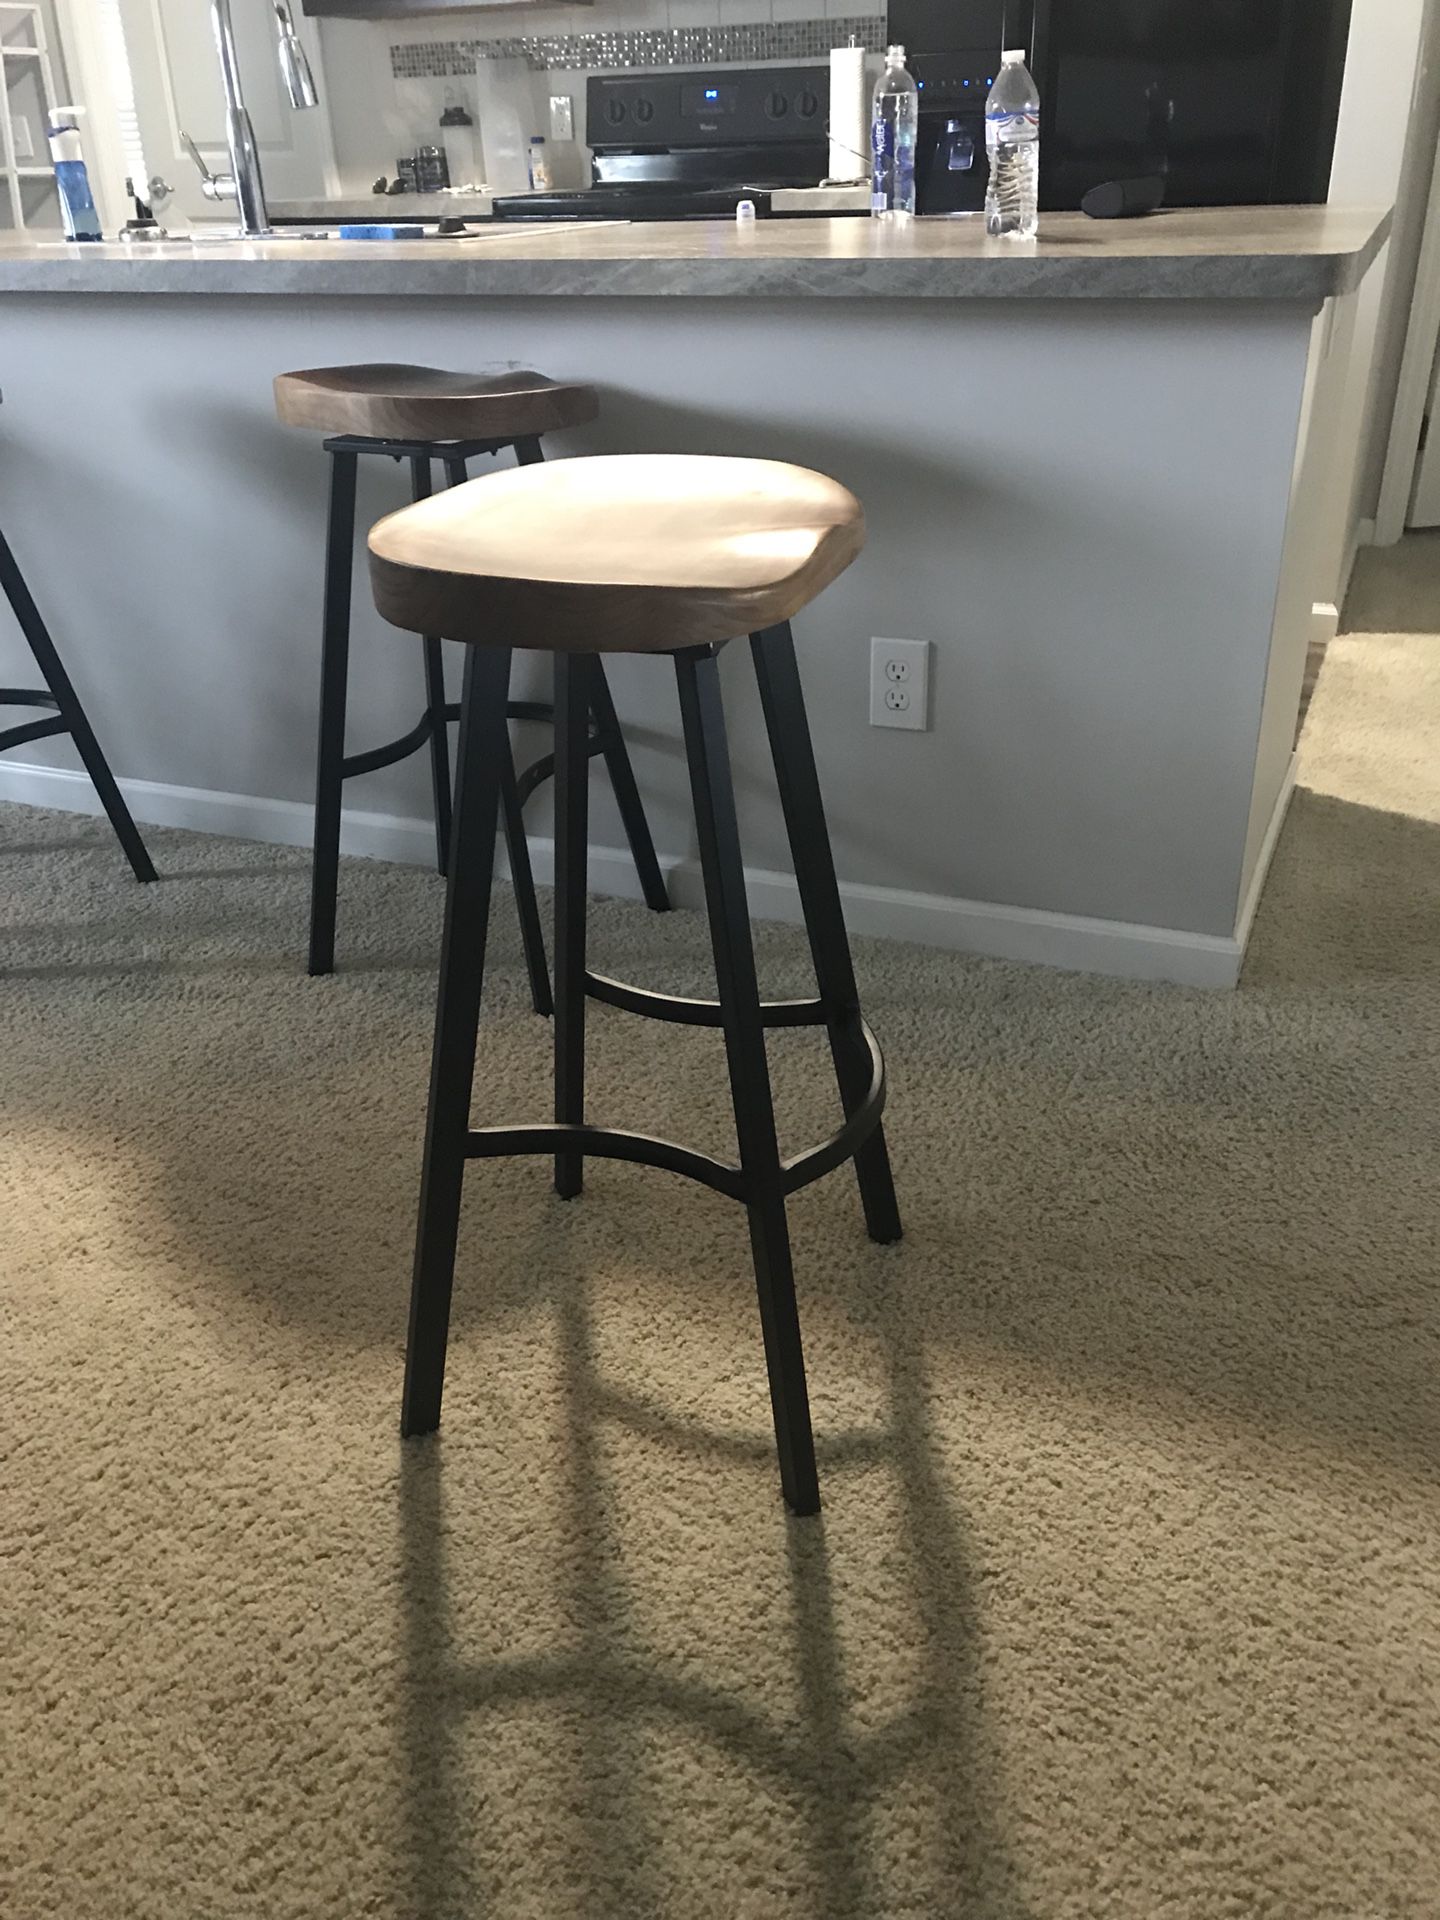 32” bar stools Brand New